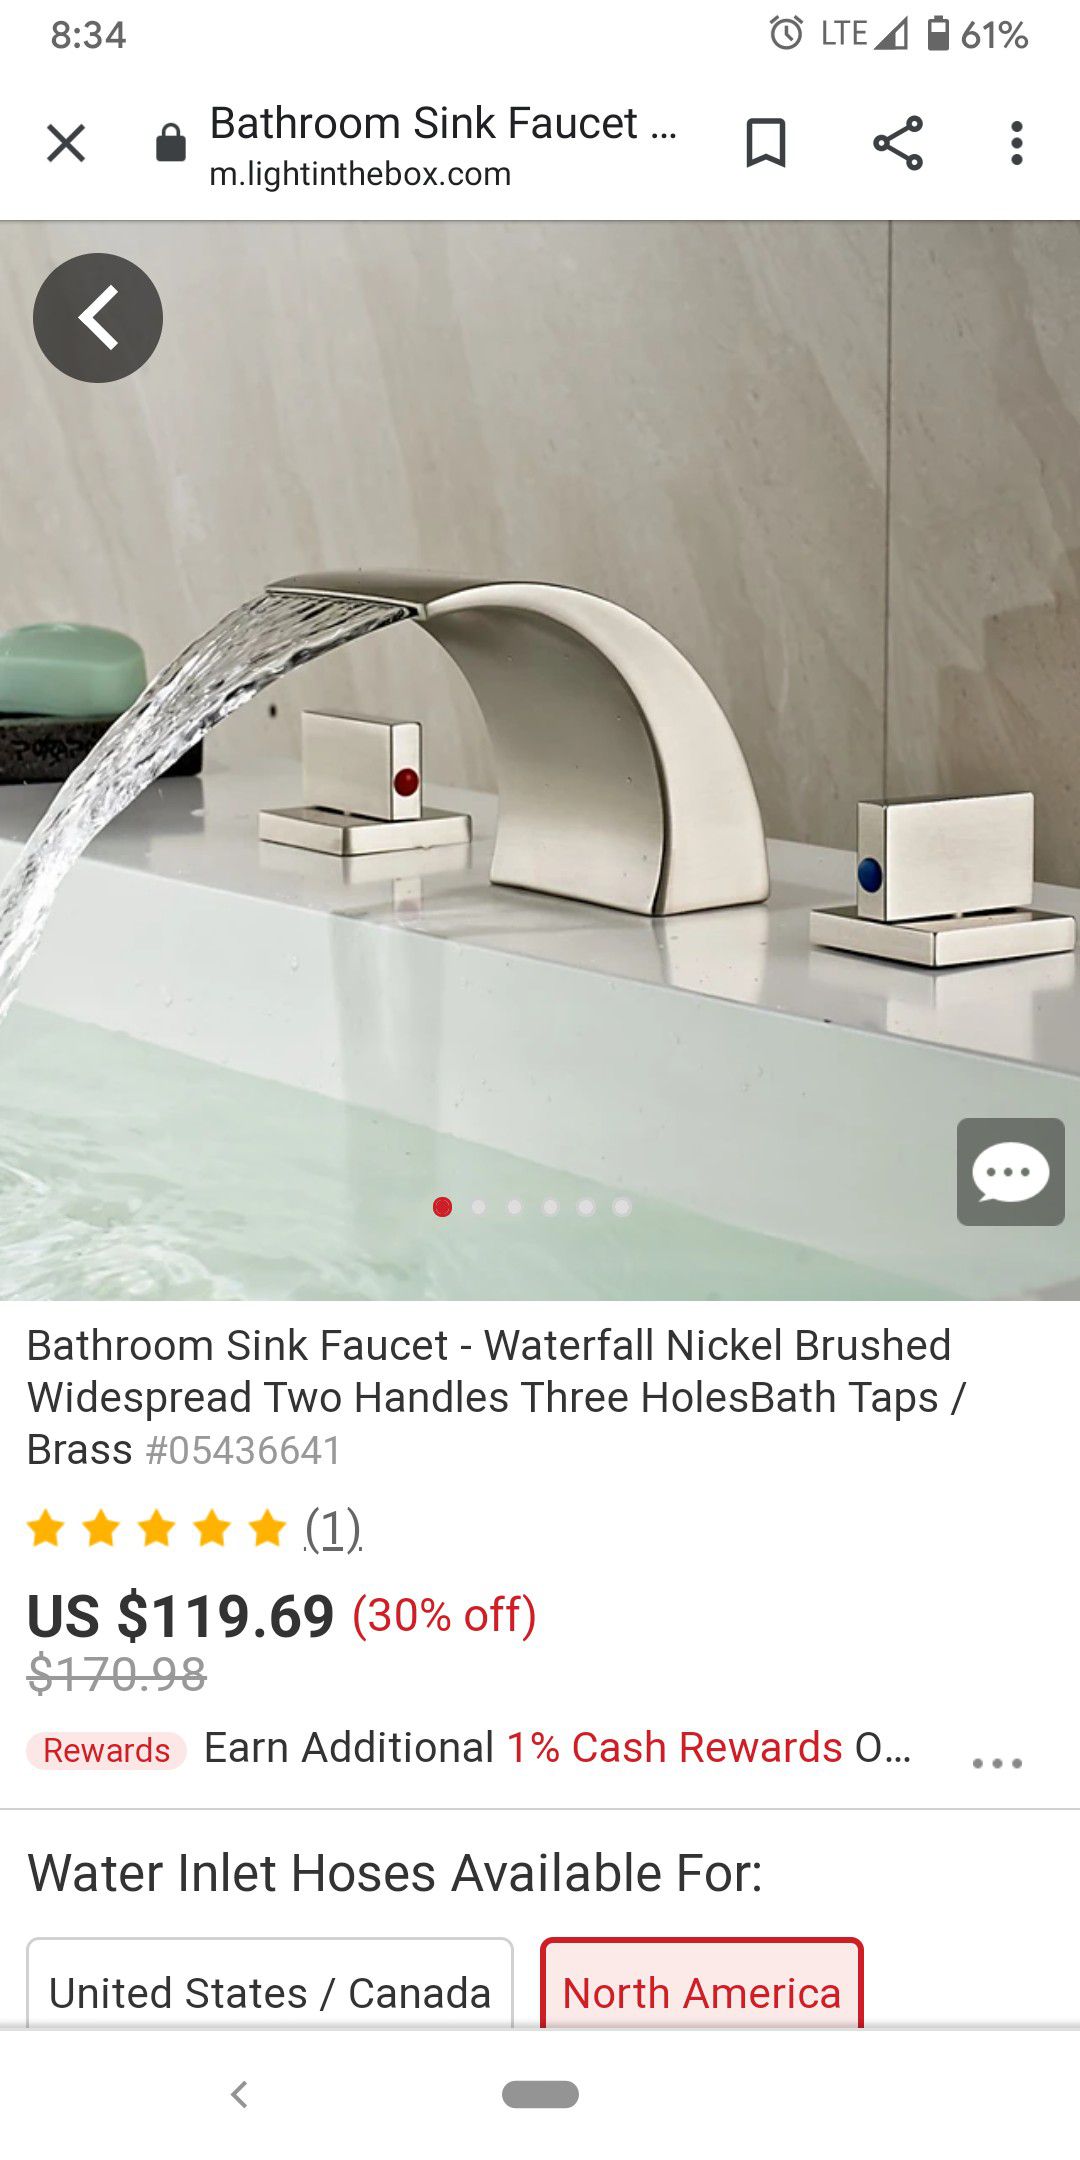 Bathroom Sink Faucet - Waterfall Nickel Brushed Widespread Two Handles Three HolesBath Taps